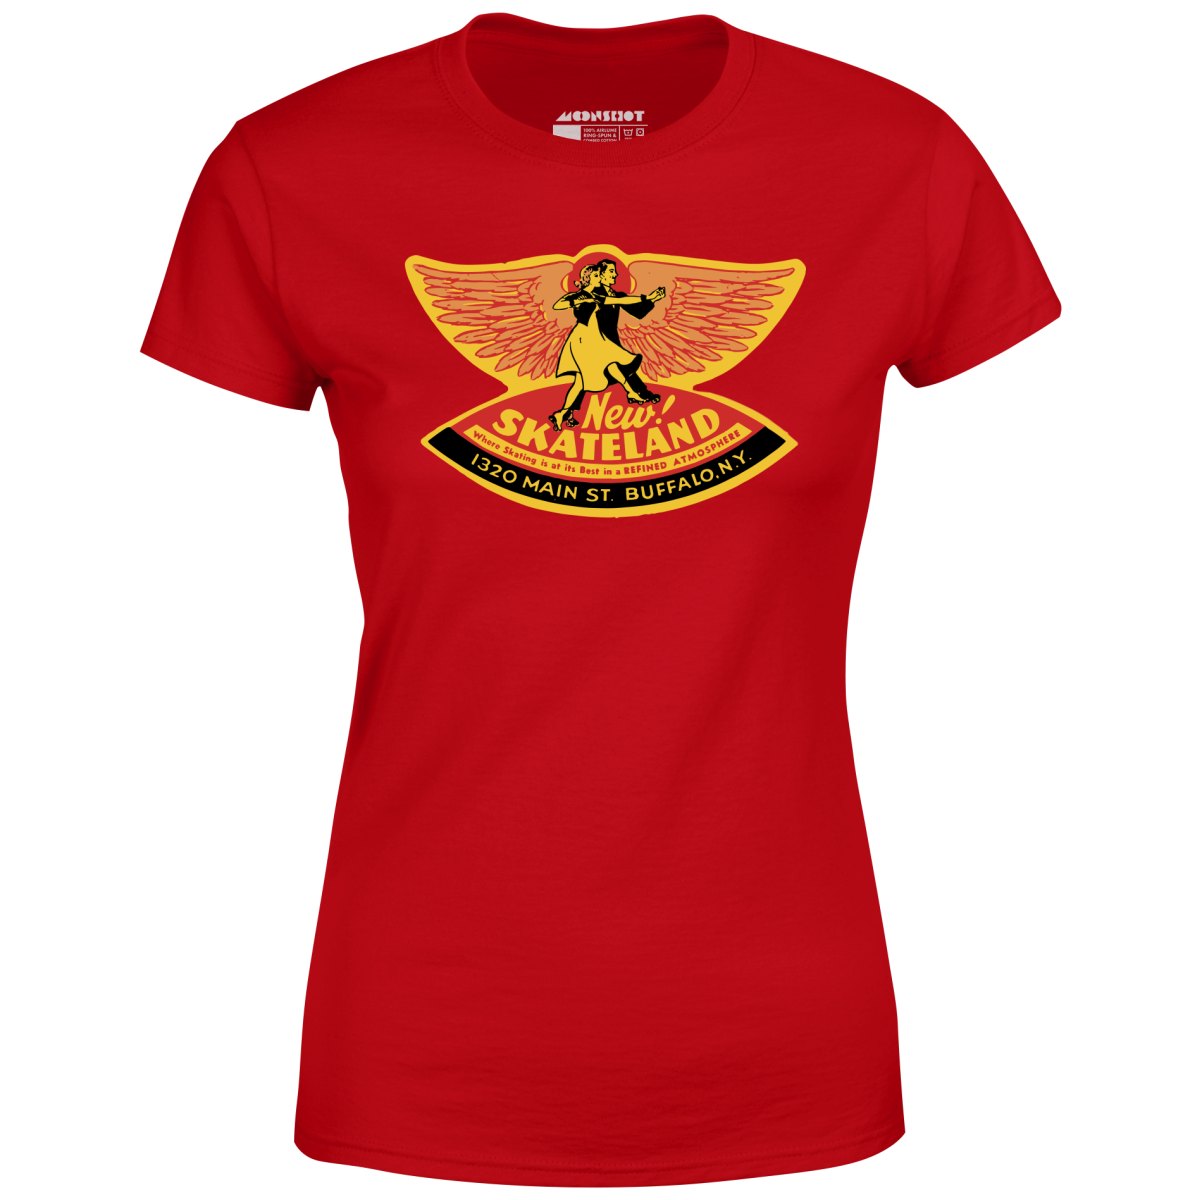 New Skateland - Buffalo, NY - Vintage Roller Rink - Women's T-Shirt